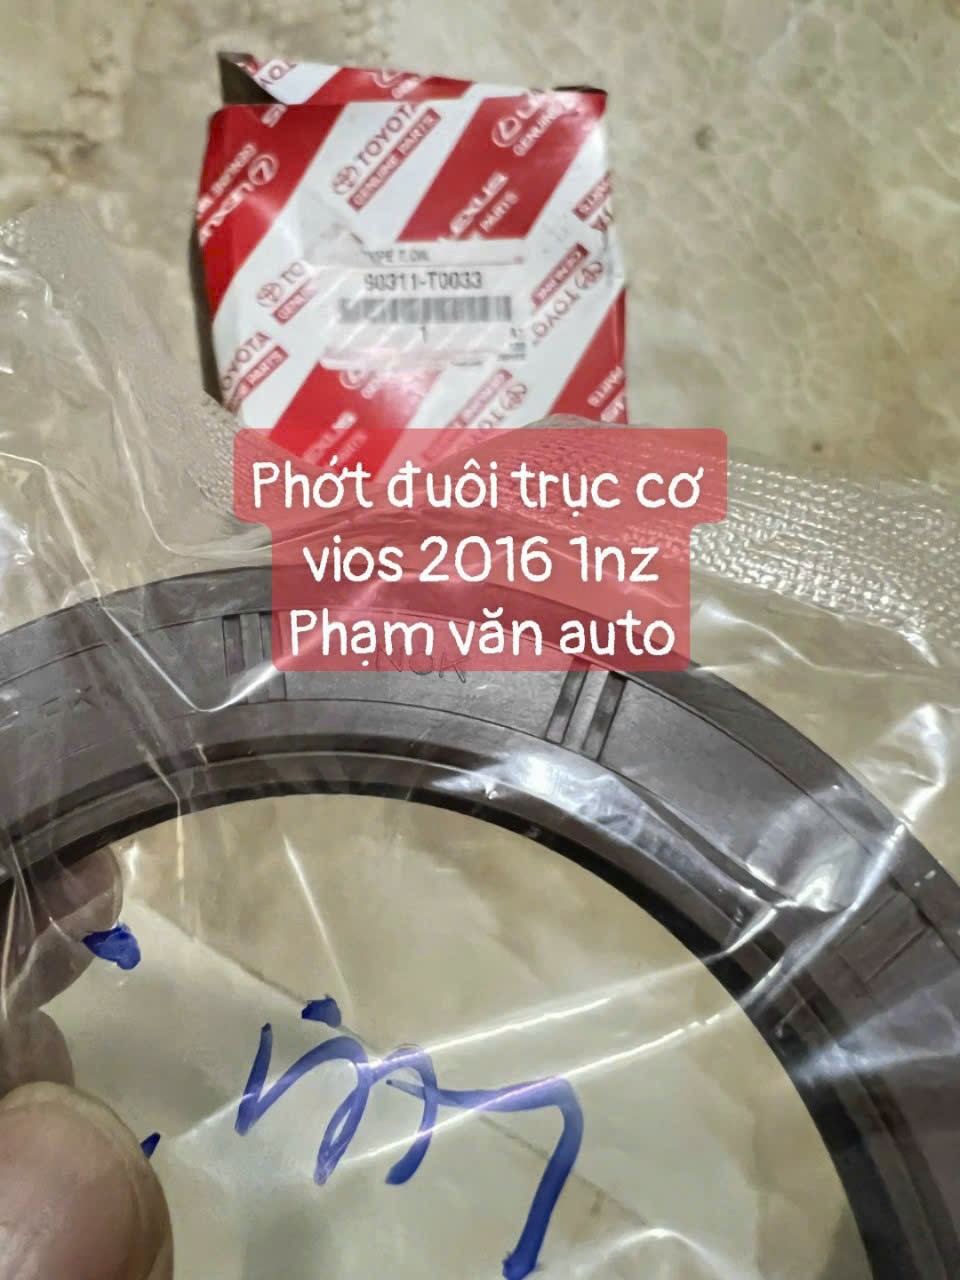 Phot Duoi Truc Co Toyota Vios 1nz 3